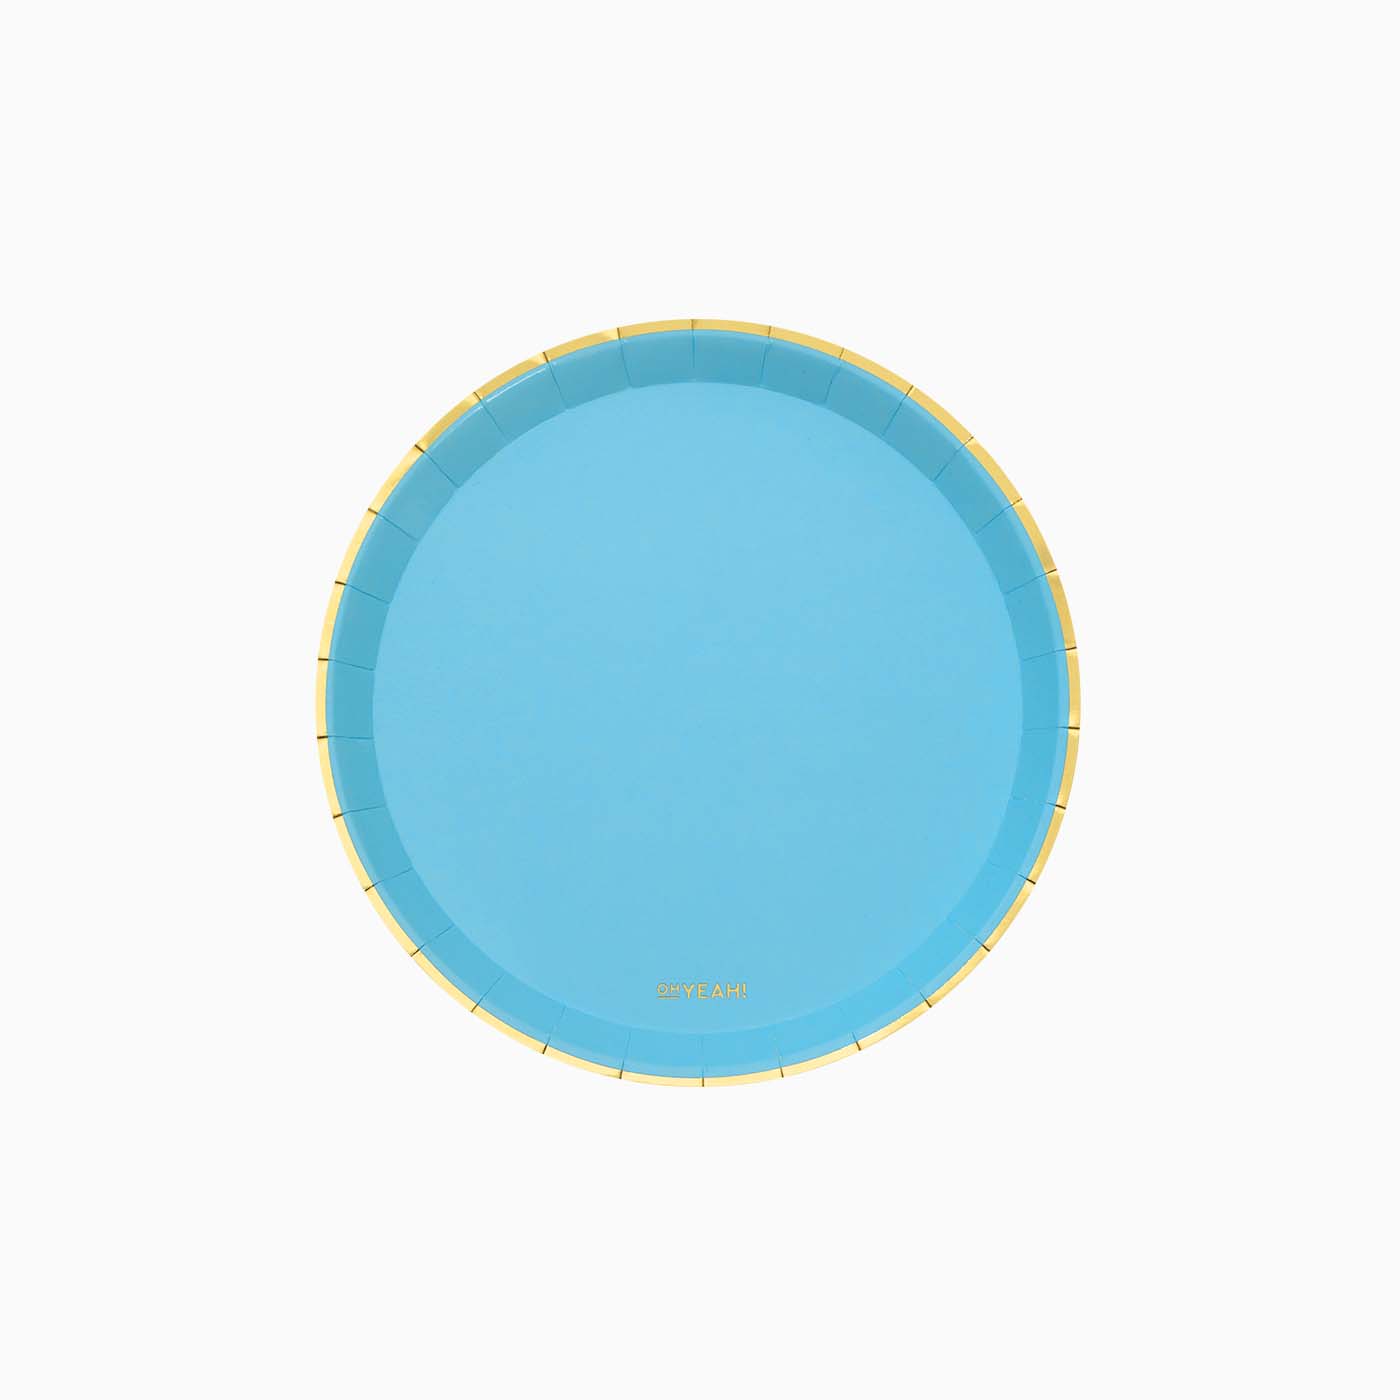 Round plain cardboard dessert metallic Ø 17 cm cake blue